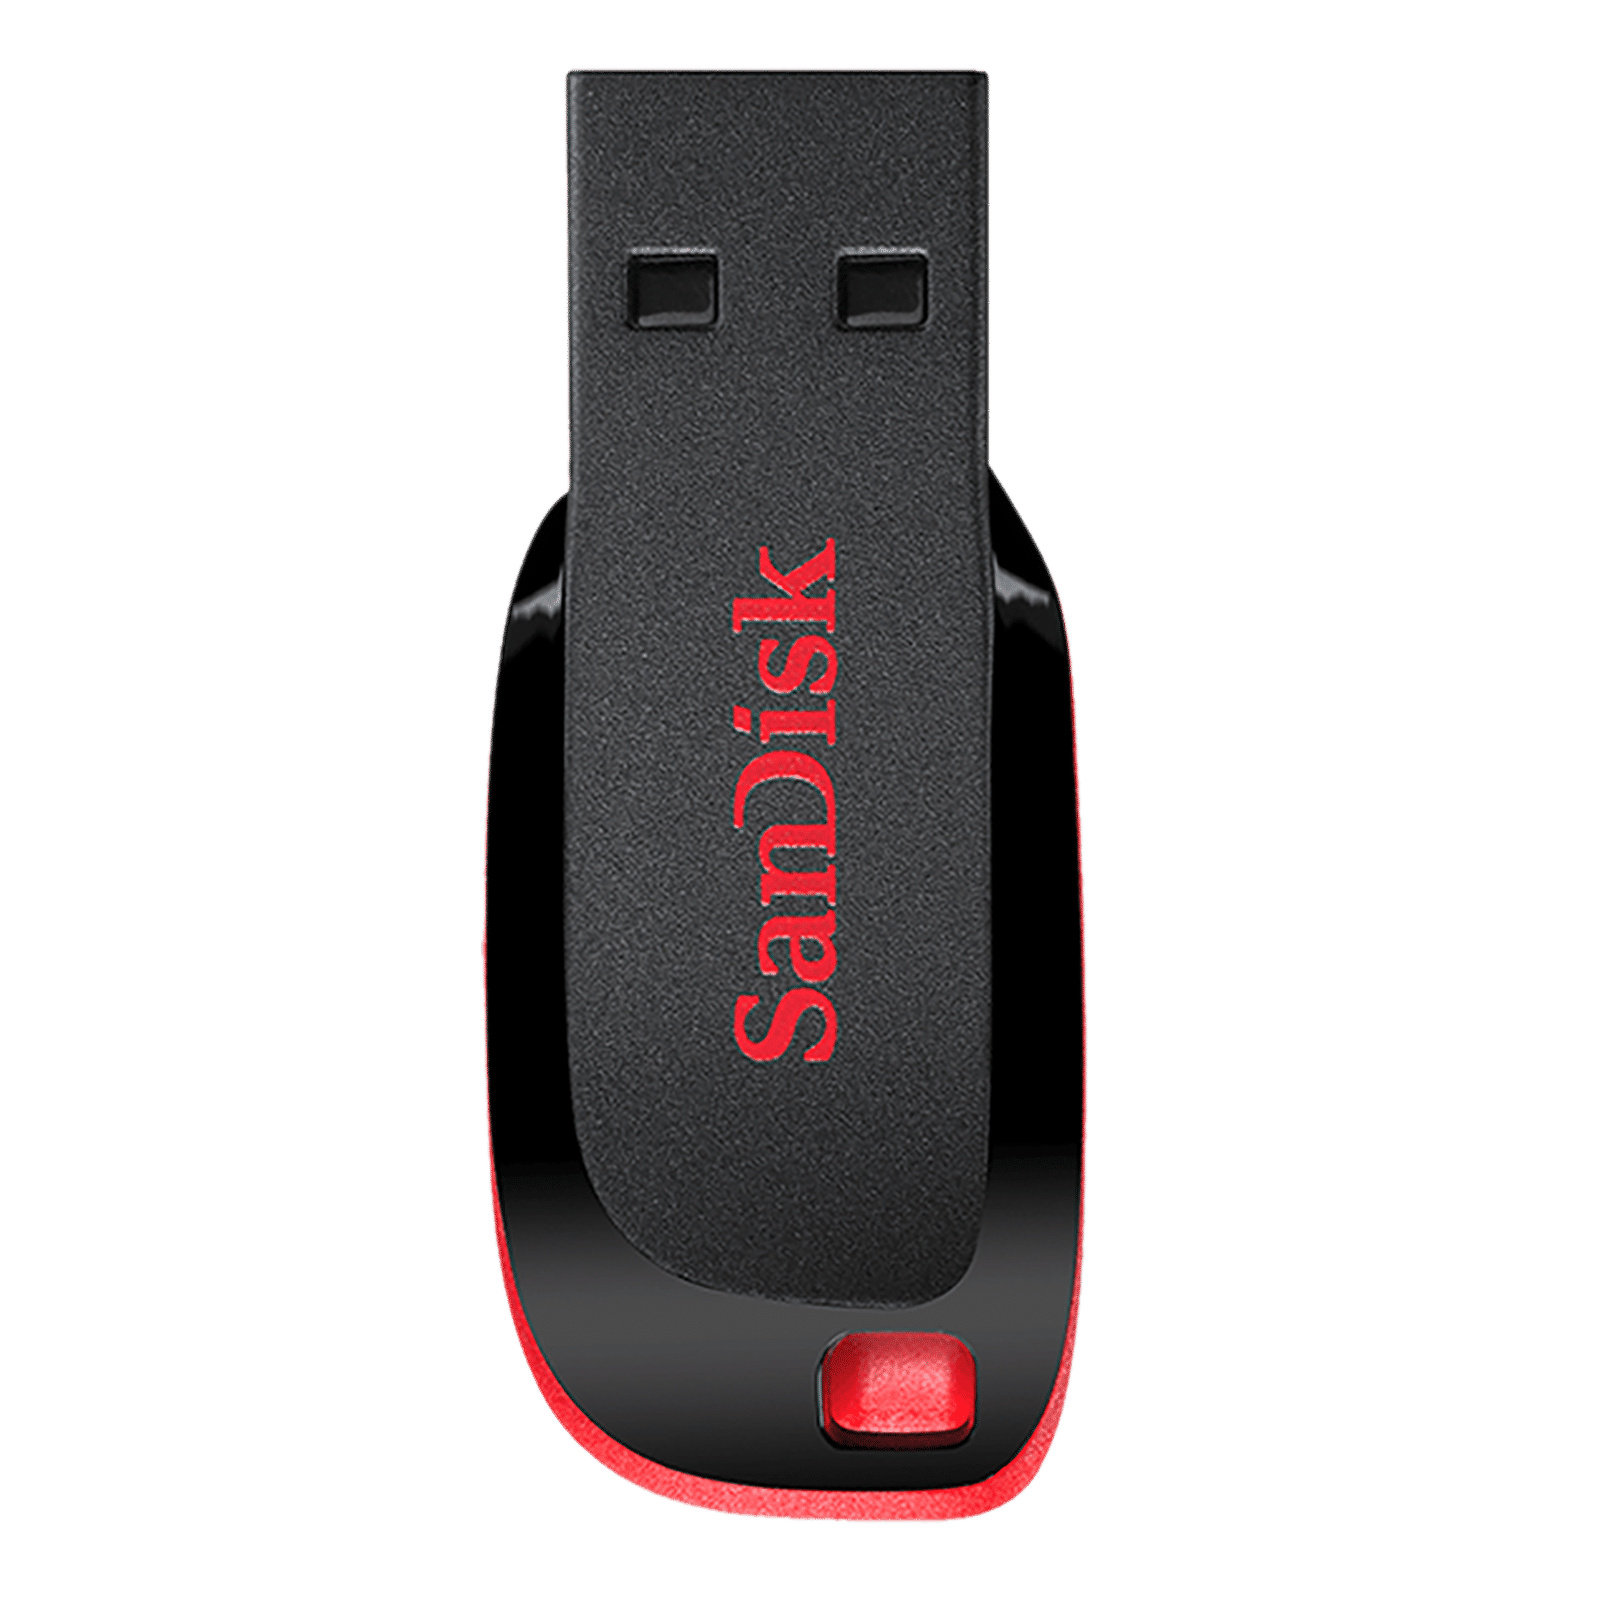 Buy SanDisk Cruzer Blade 64GB USB 2.0 Flash Drive (SDCZ50-064G-B35